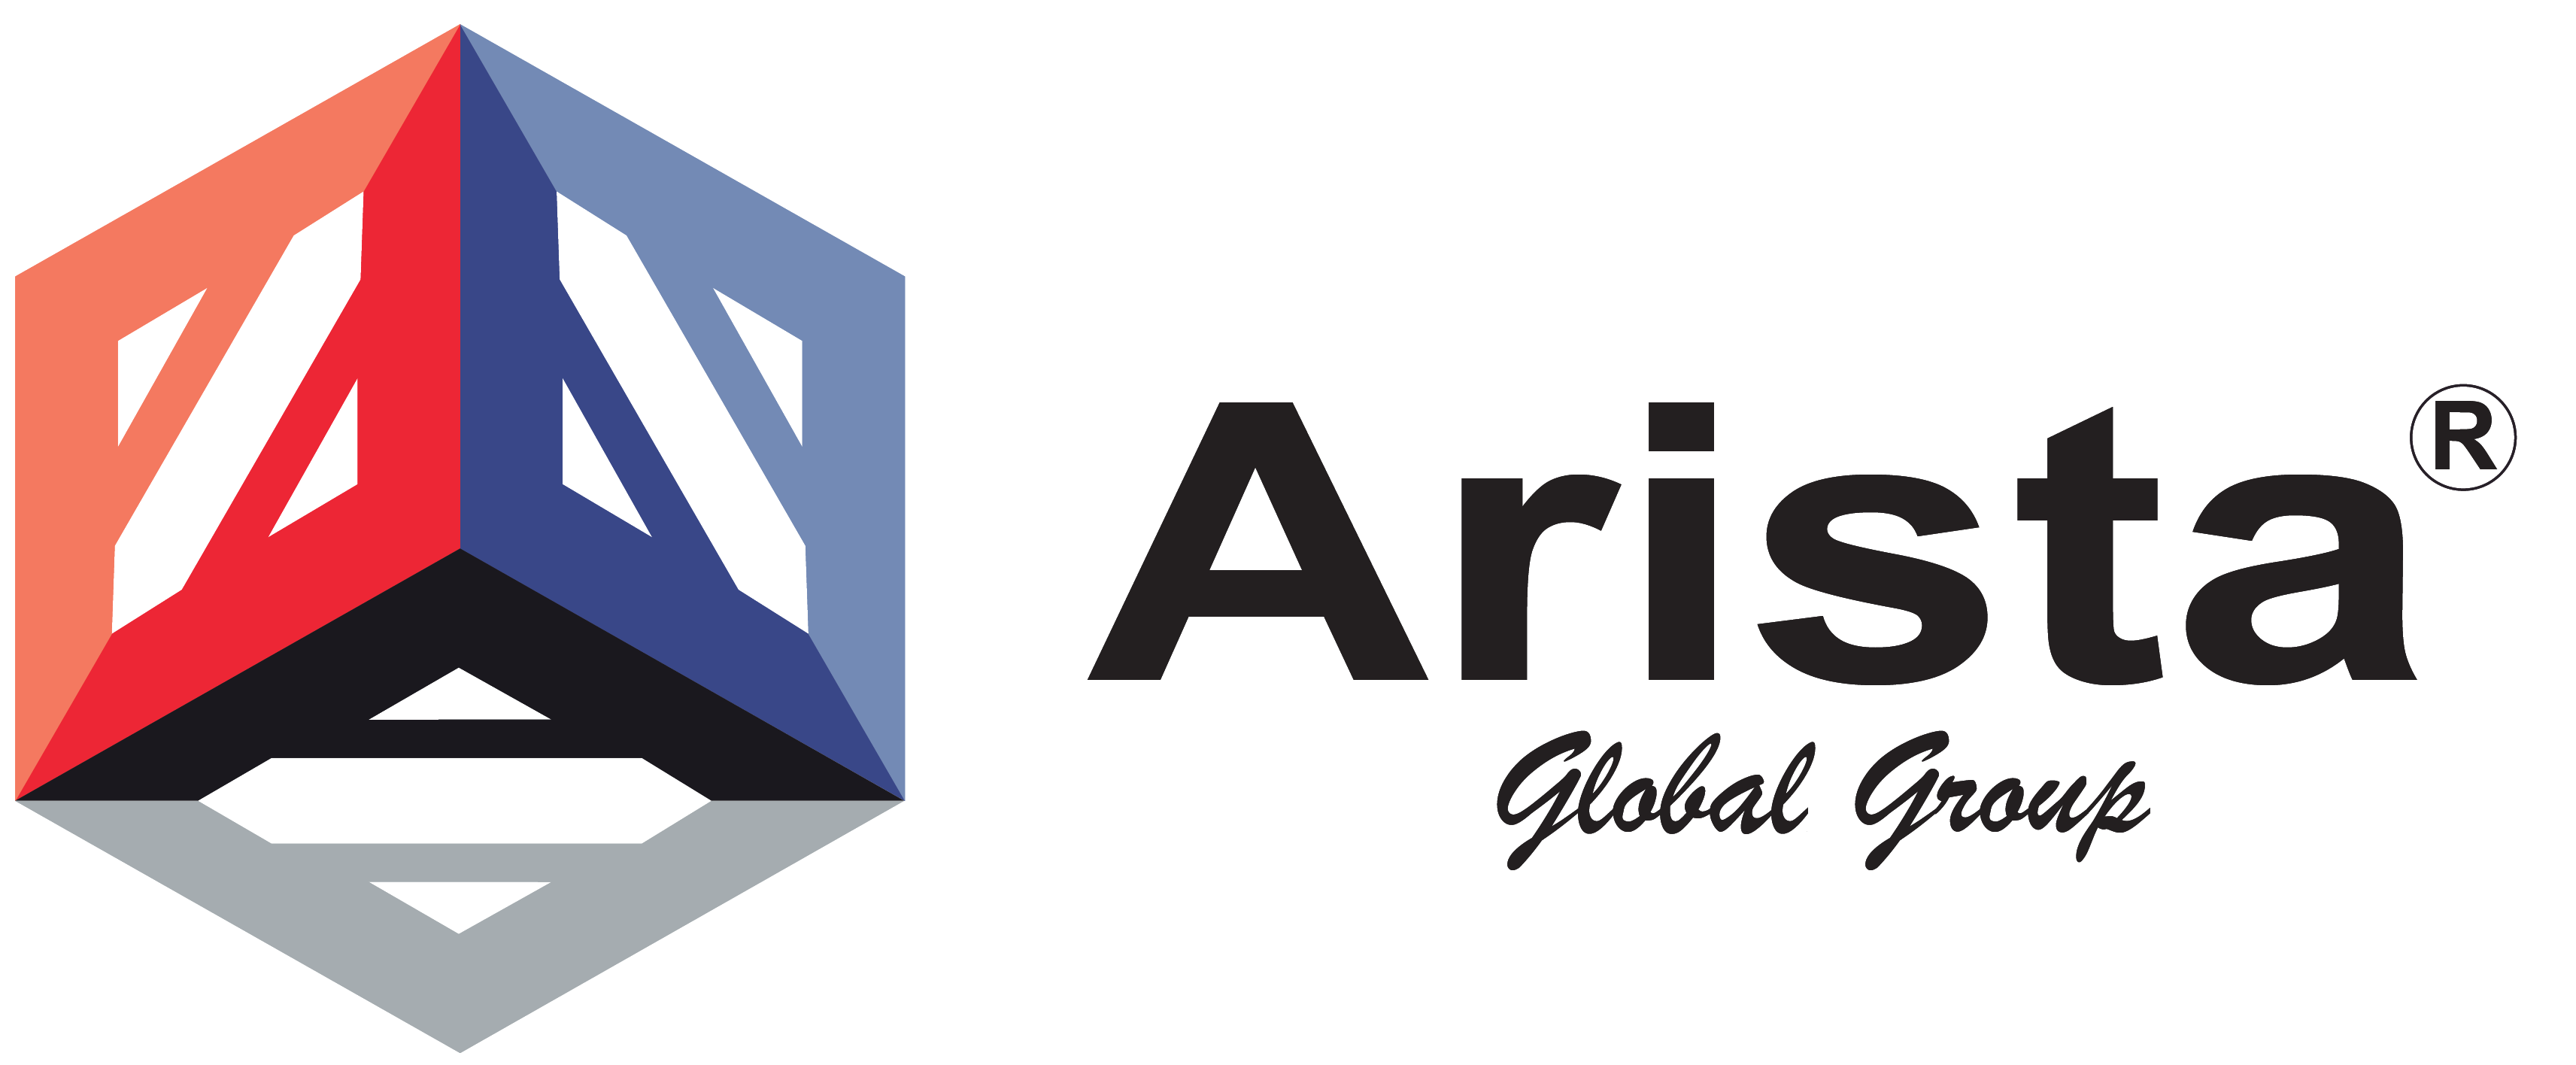 Arista Global OnLine